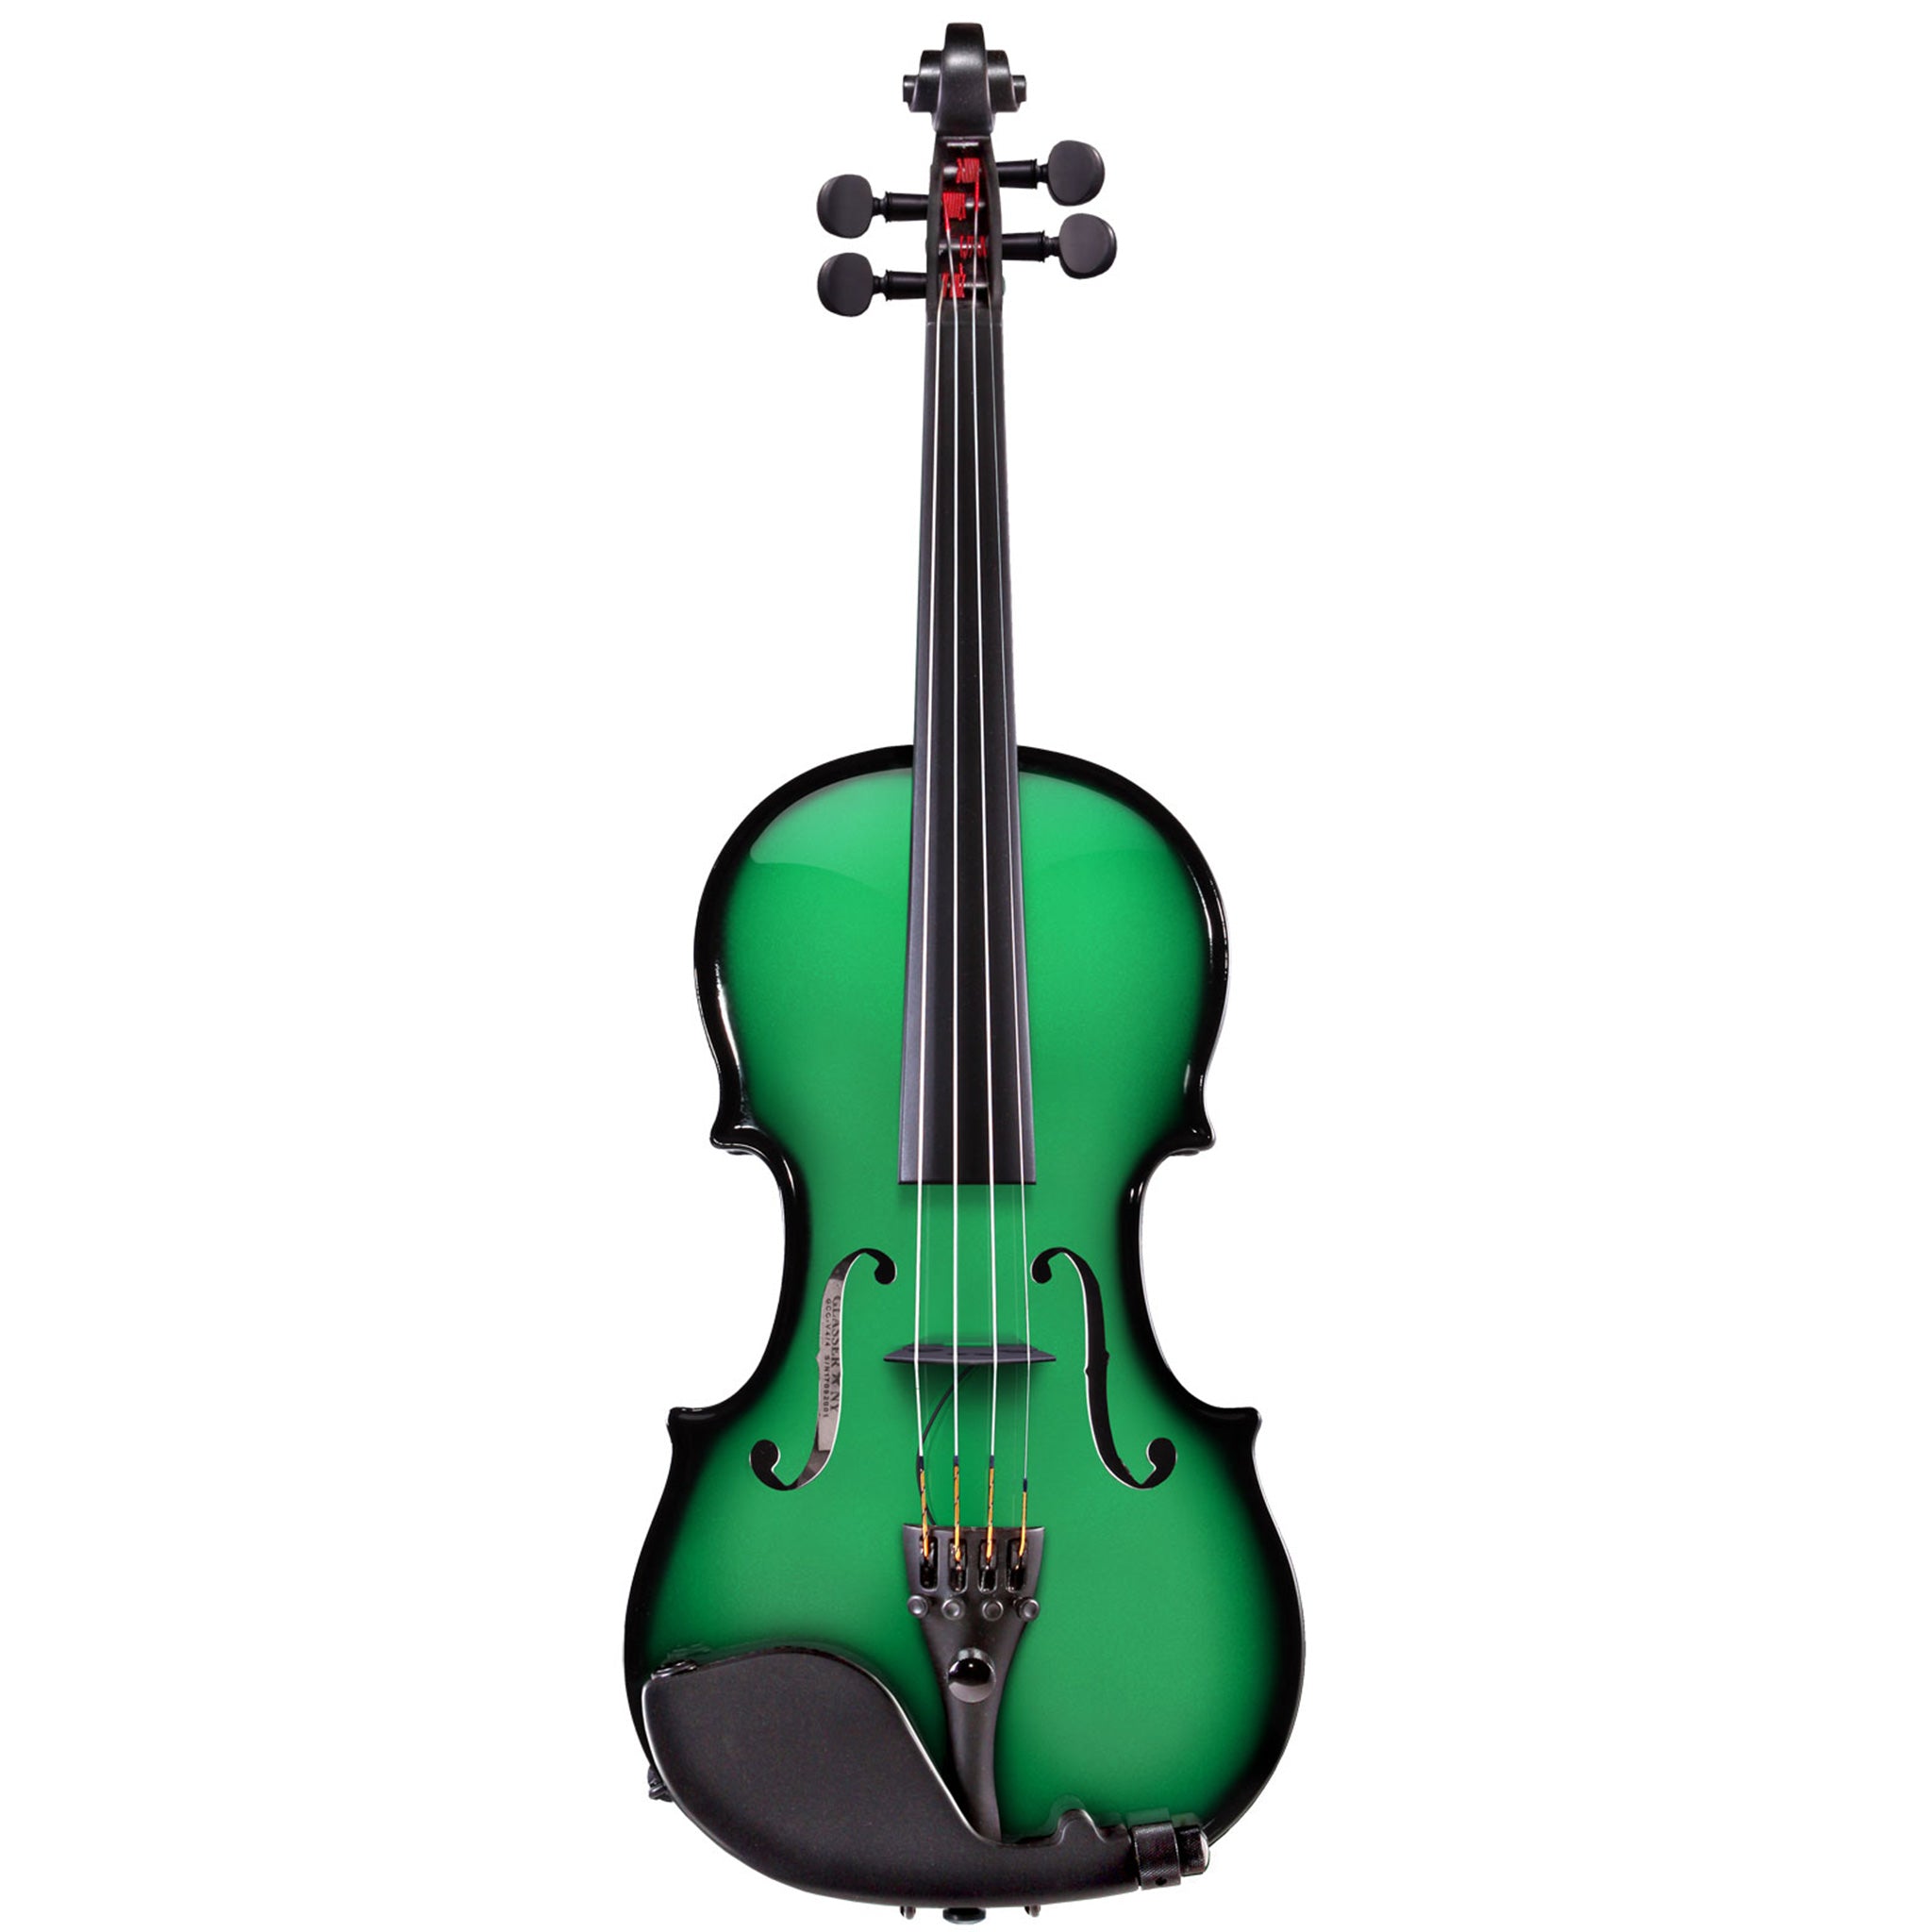 Glasser AEX Carbon Composite Acoustic-Electric Violin